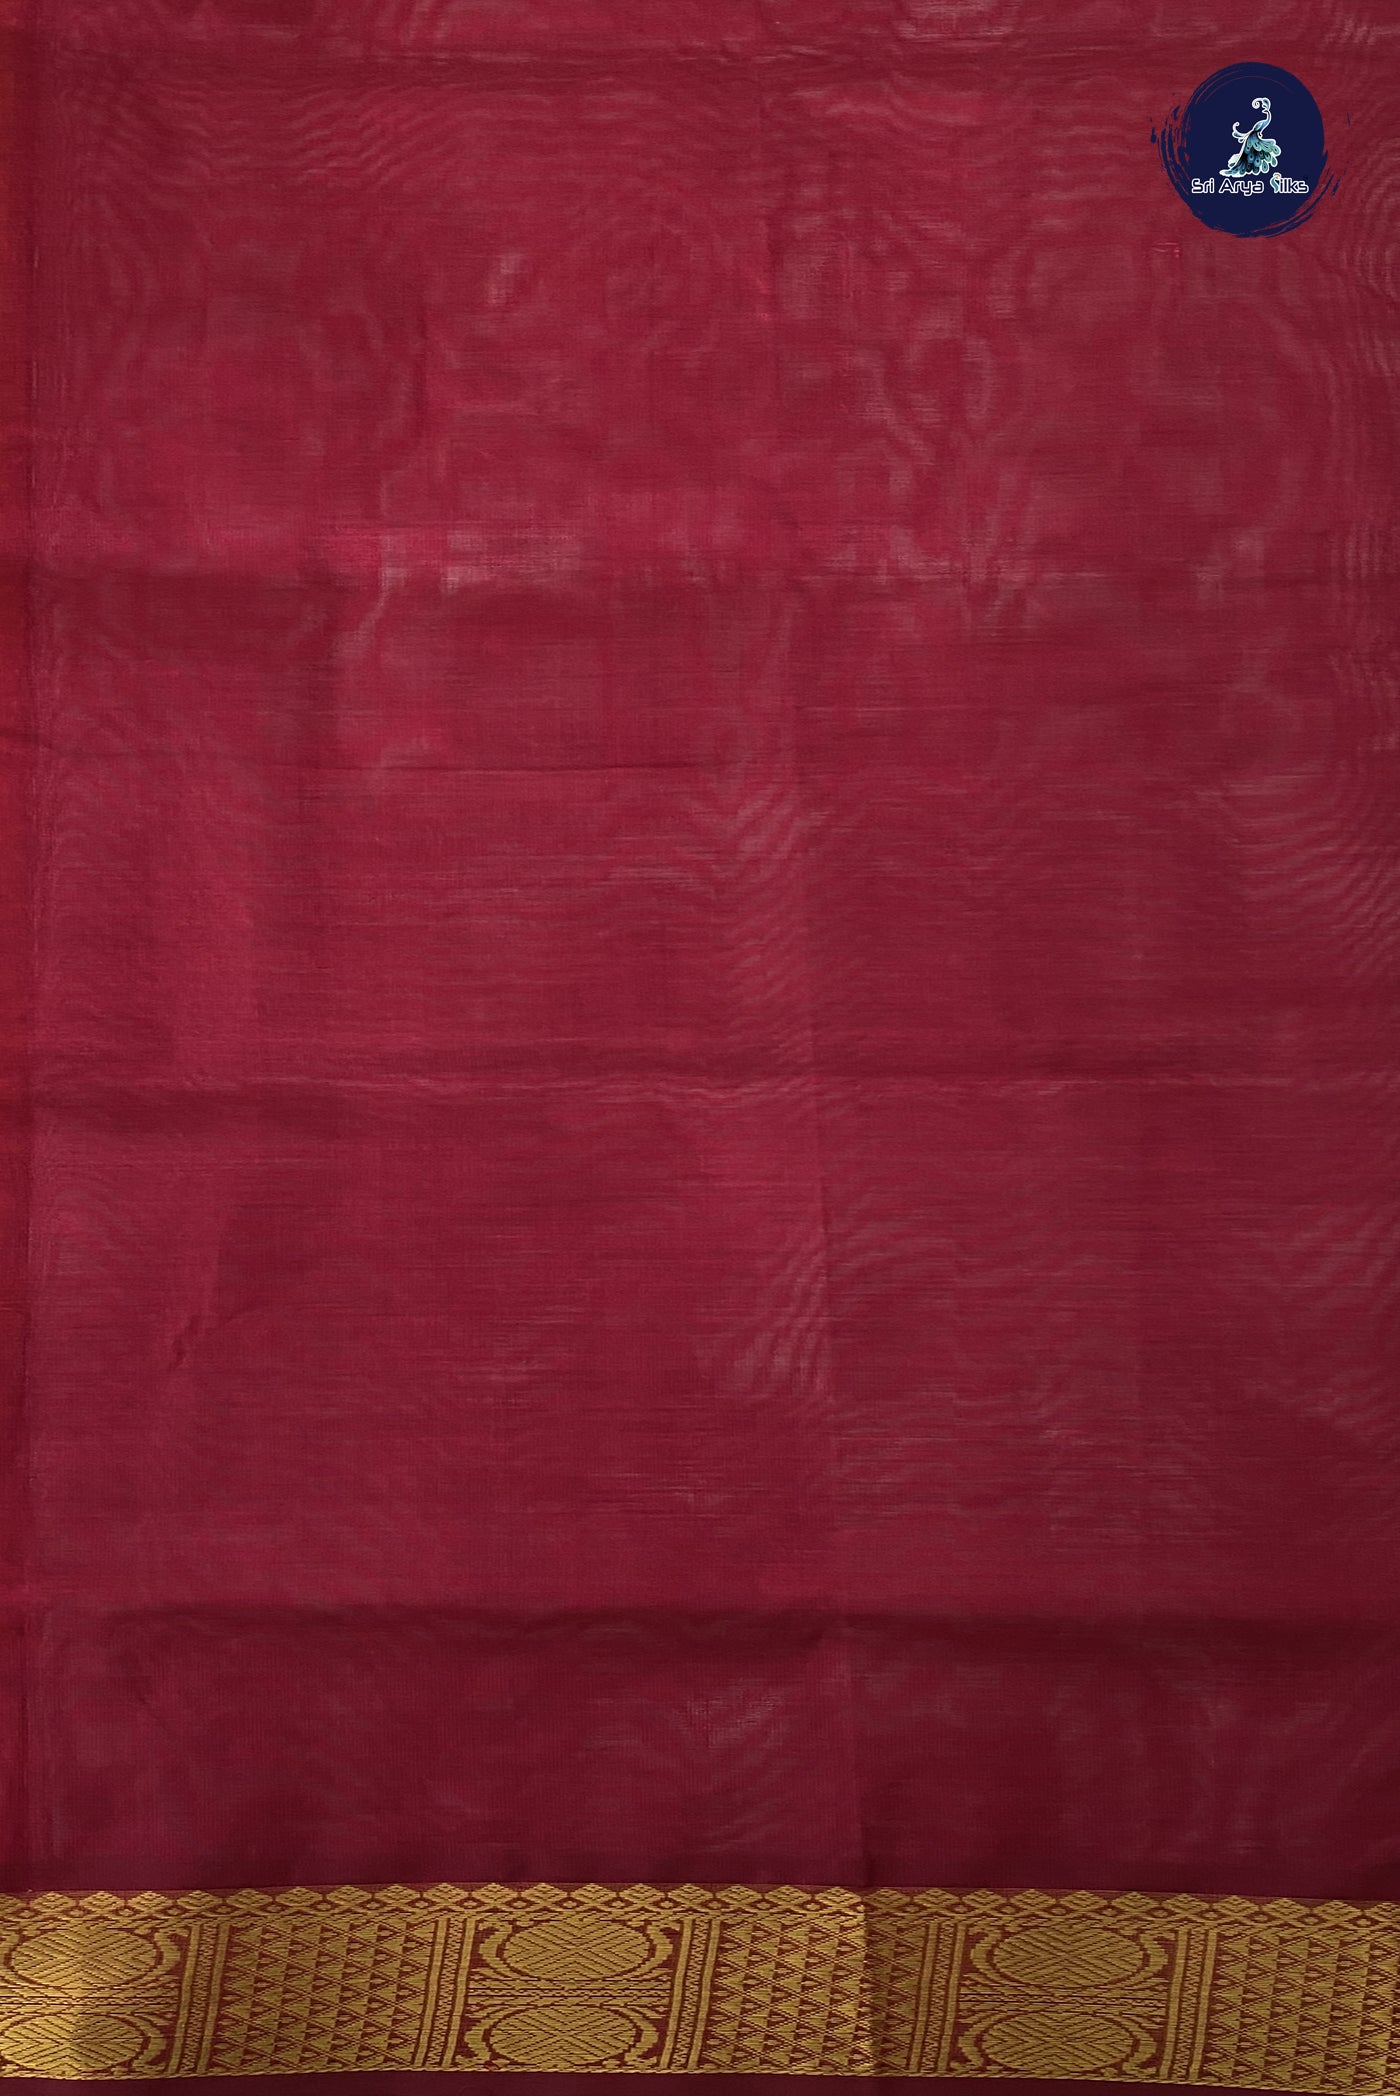 Orange Silk Cotton Saree With Plain Pattern